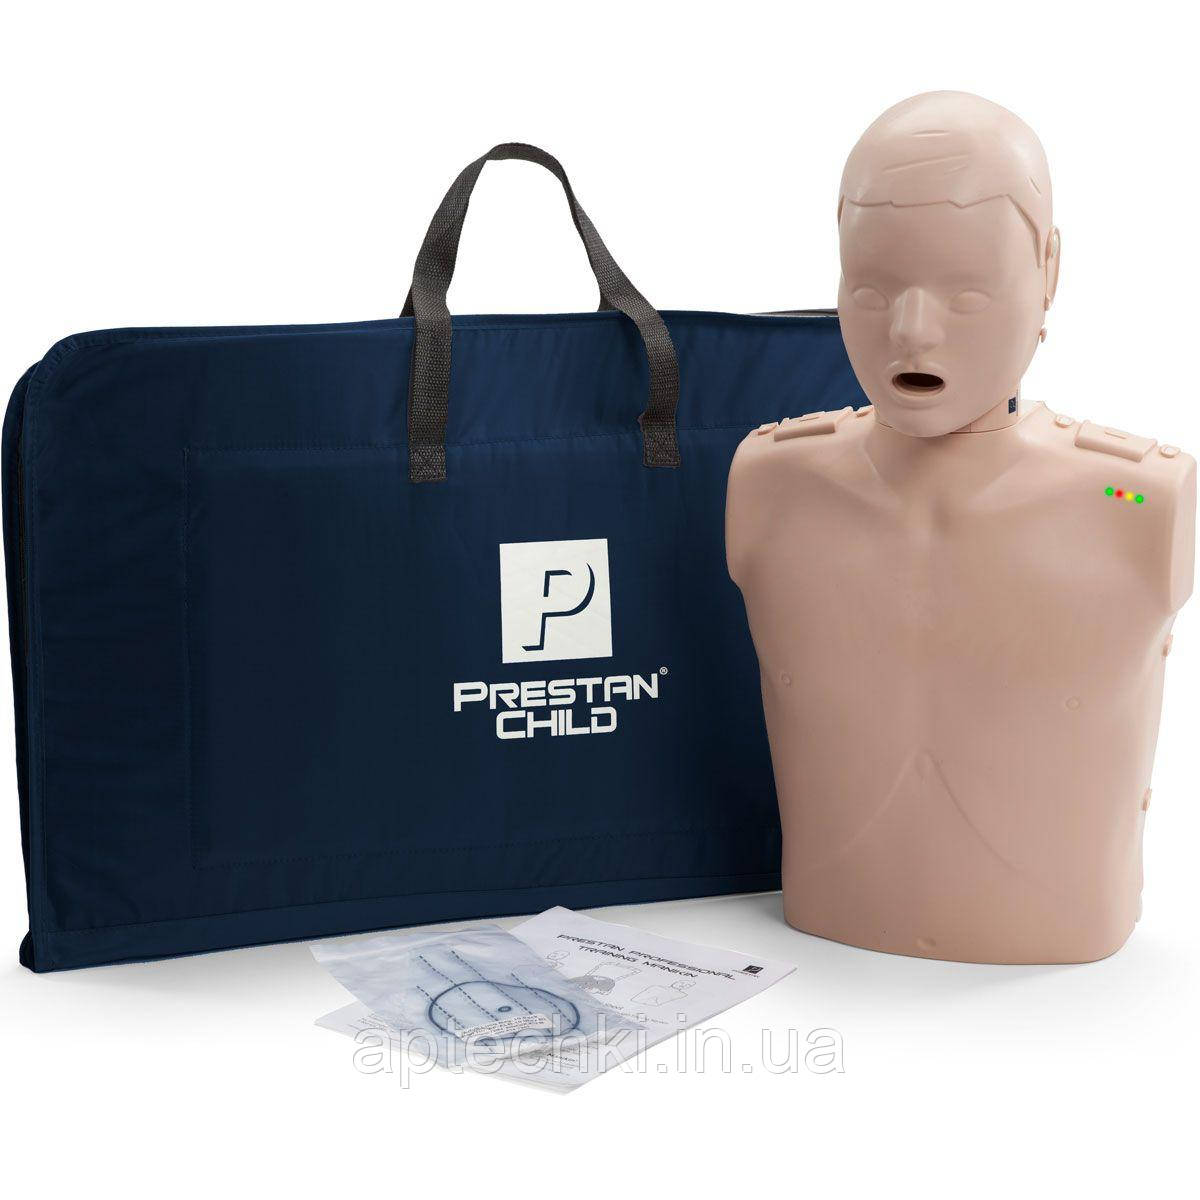 Навчальний манекен підліток Prestan Professional Child CPR-AED (з монітором CPR)